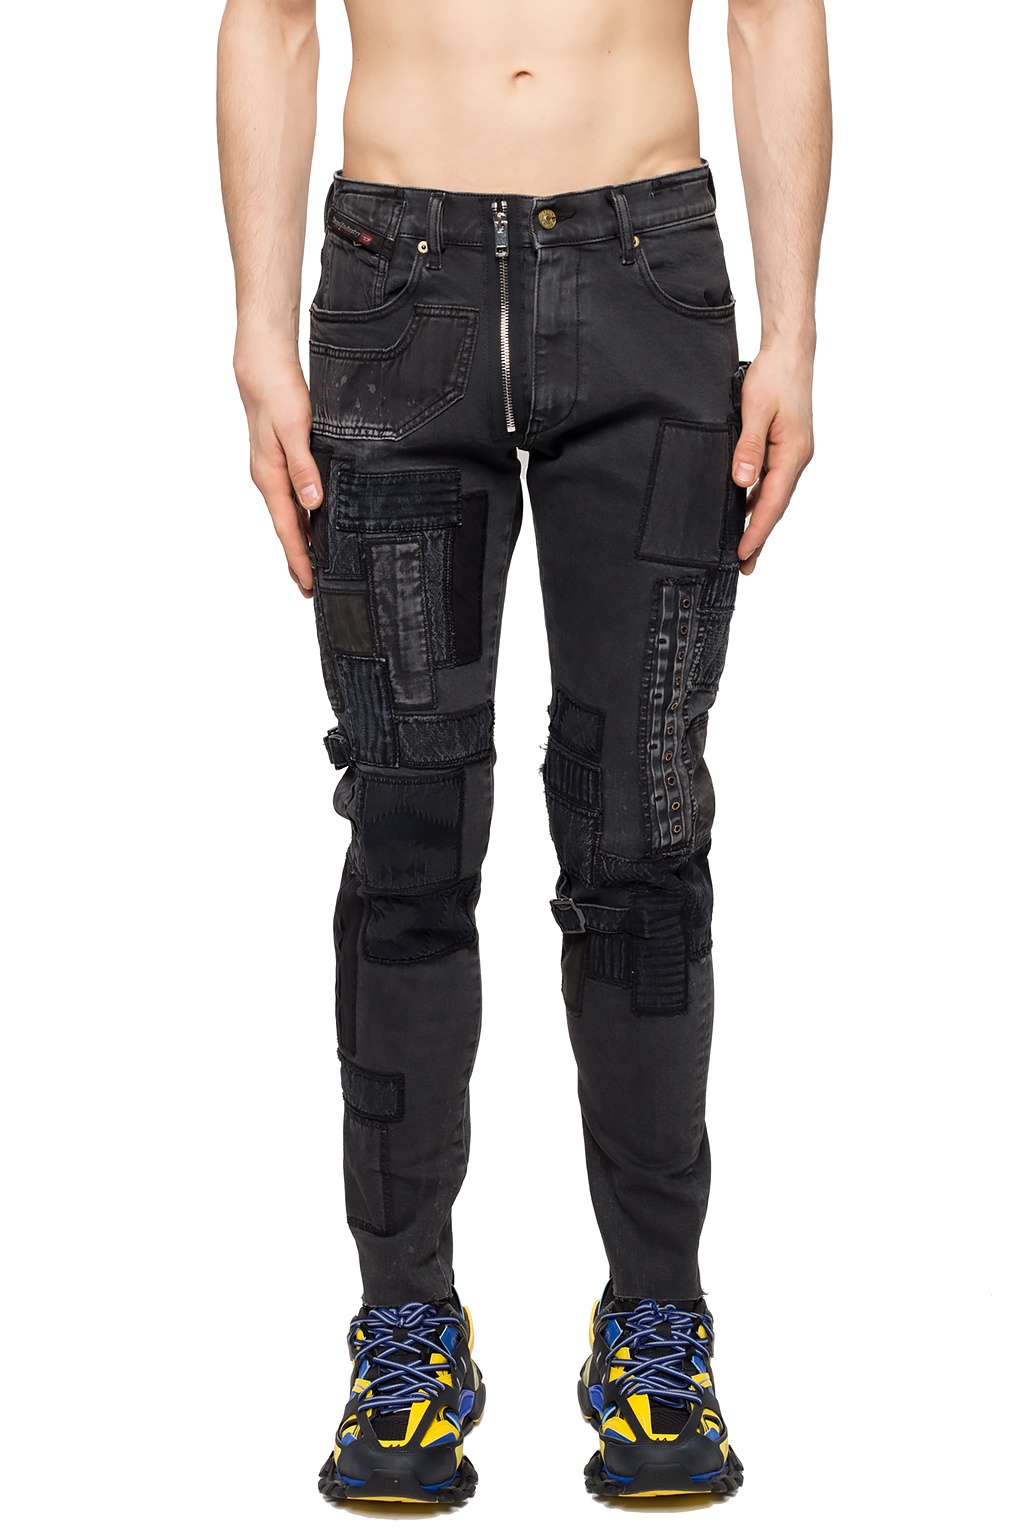 Diesel ‘D-Strukt’ jeans with patches | Men's Clothing | Vitkac